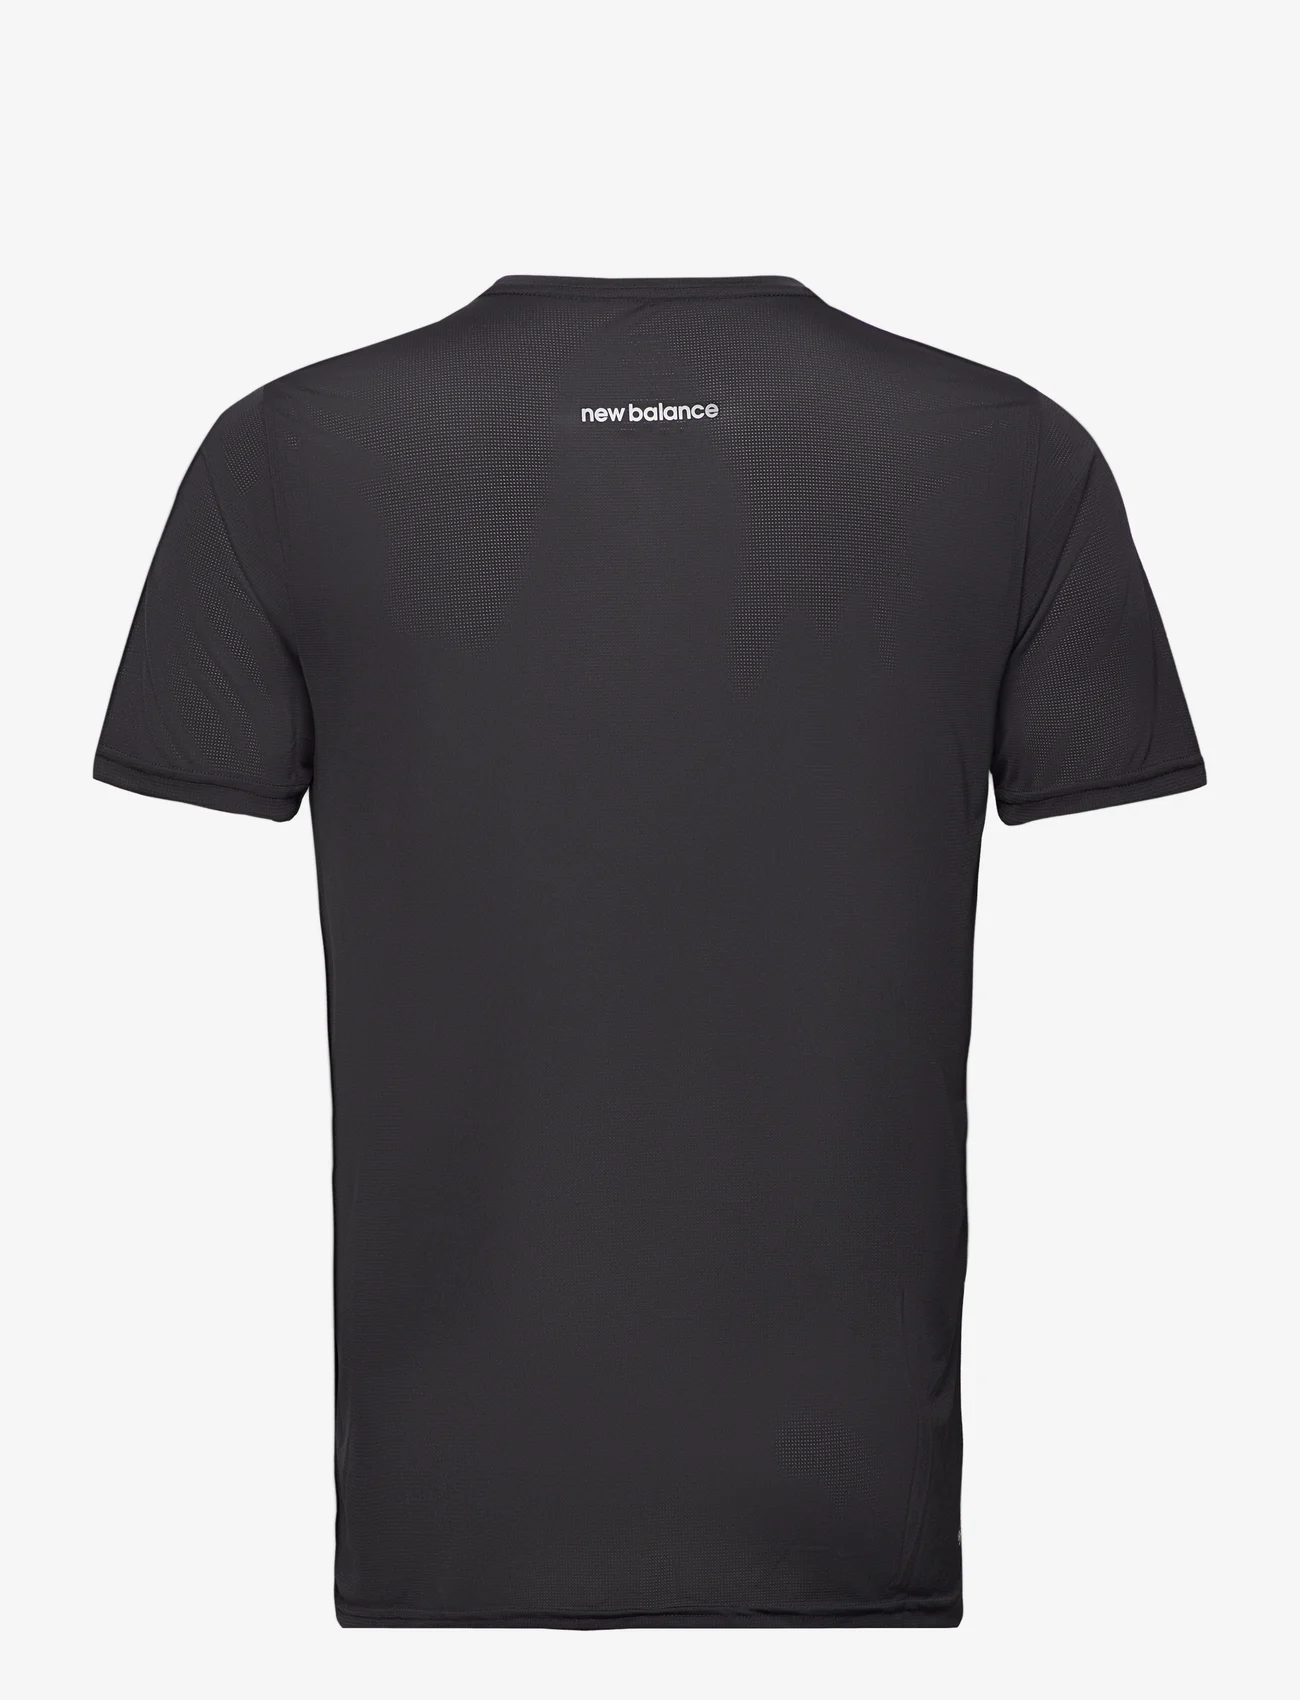 New Balance - Accelerate Short Sleeve - short-sleeved t-shirts - black - 1